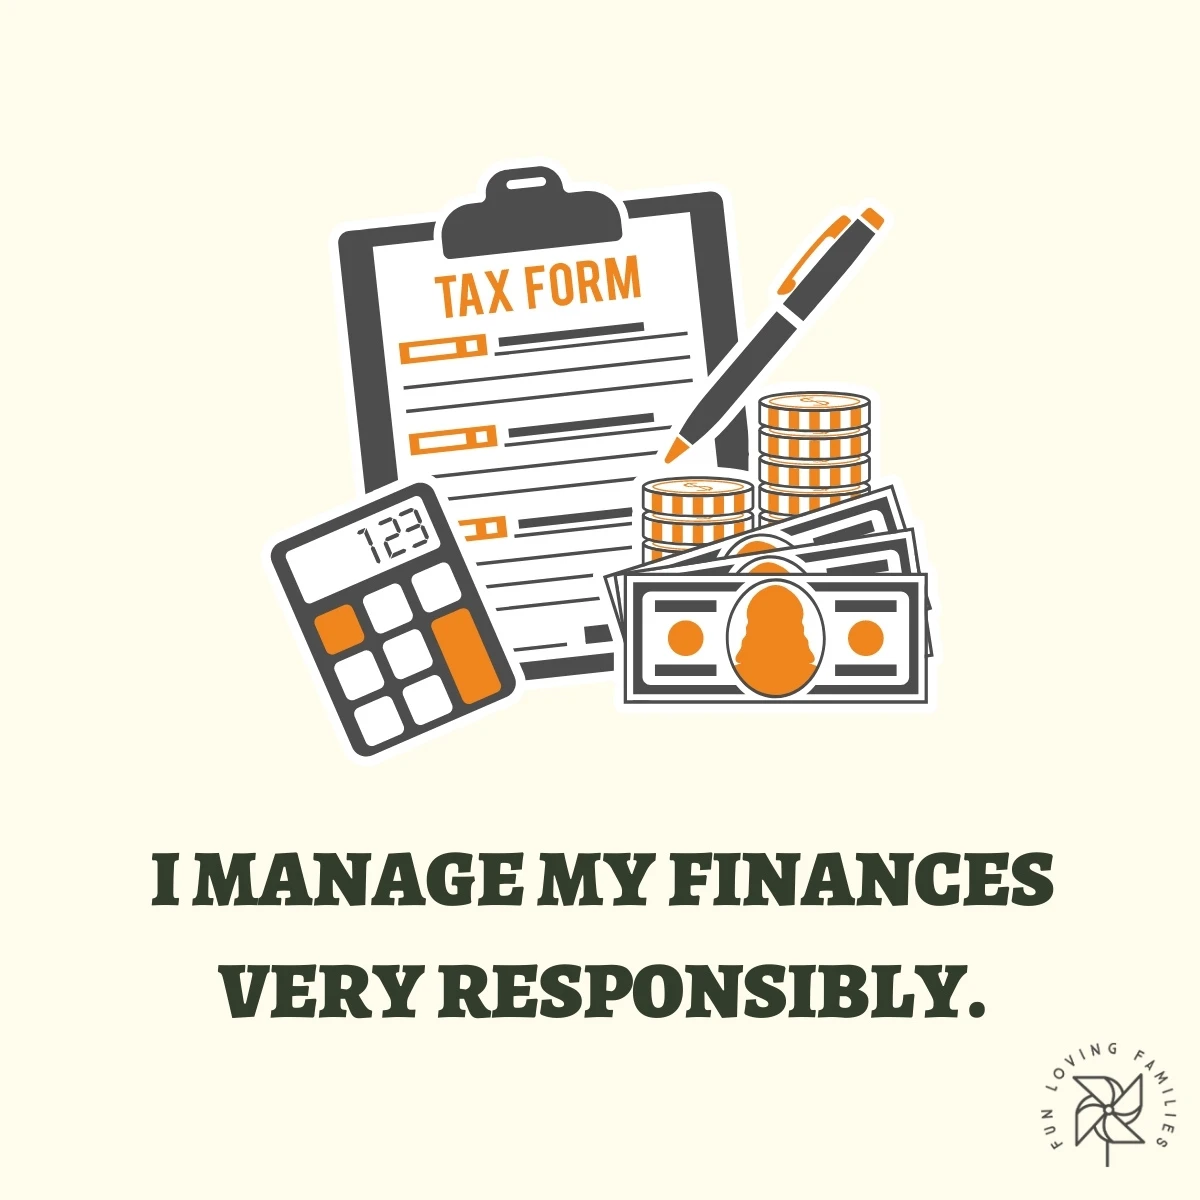 I manage my finances very responsibly affirmation